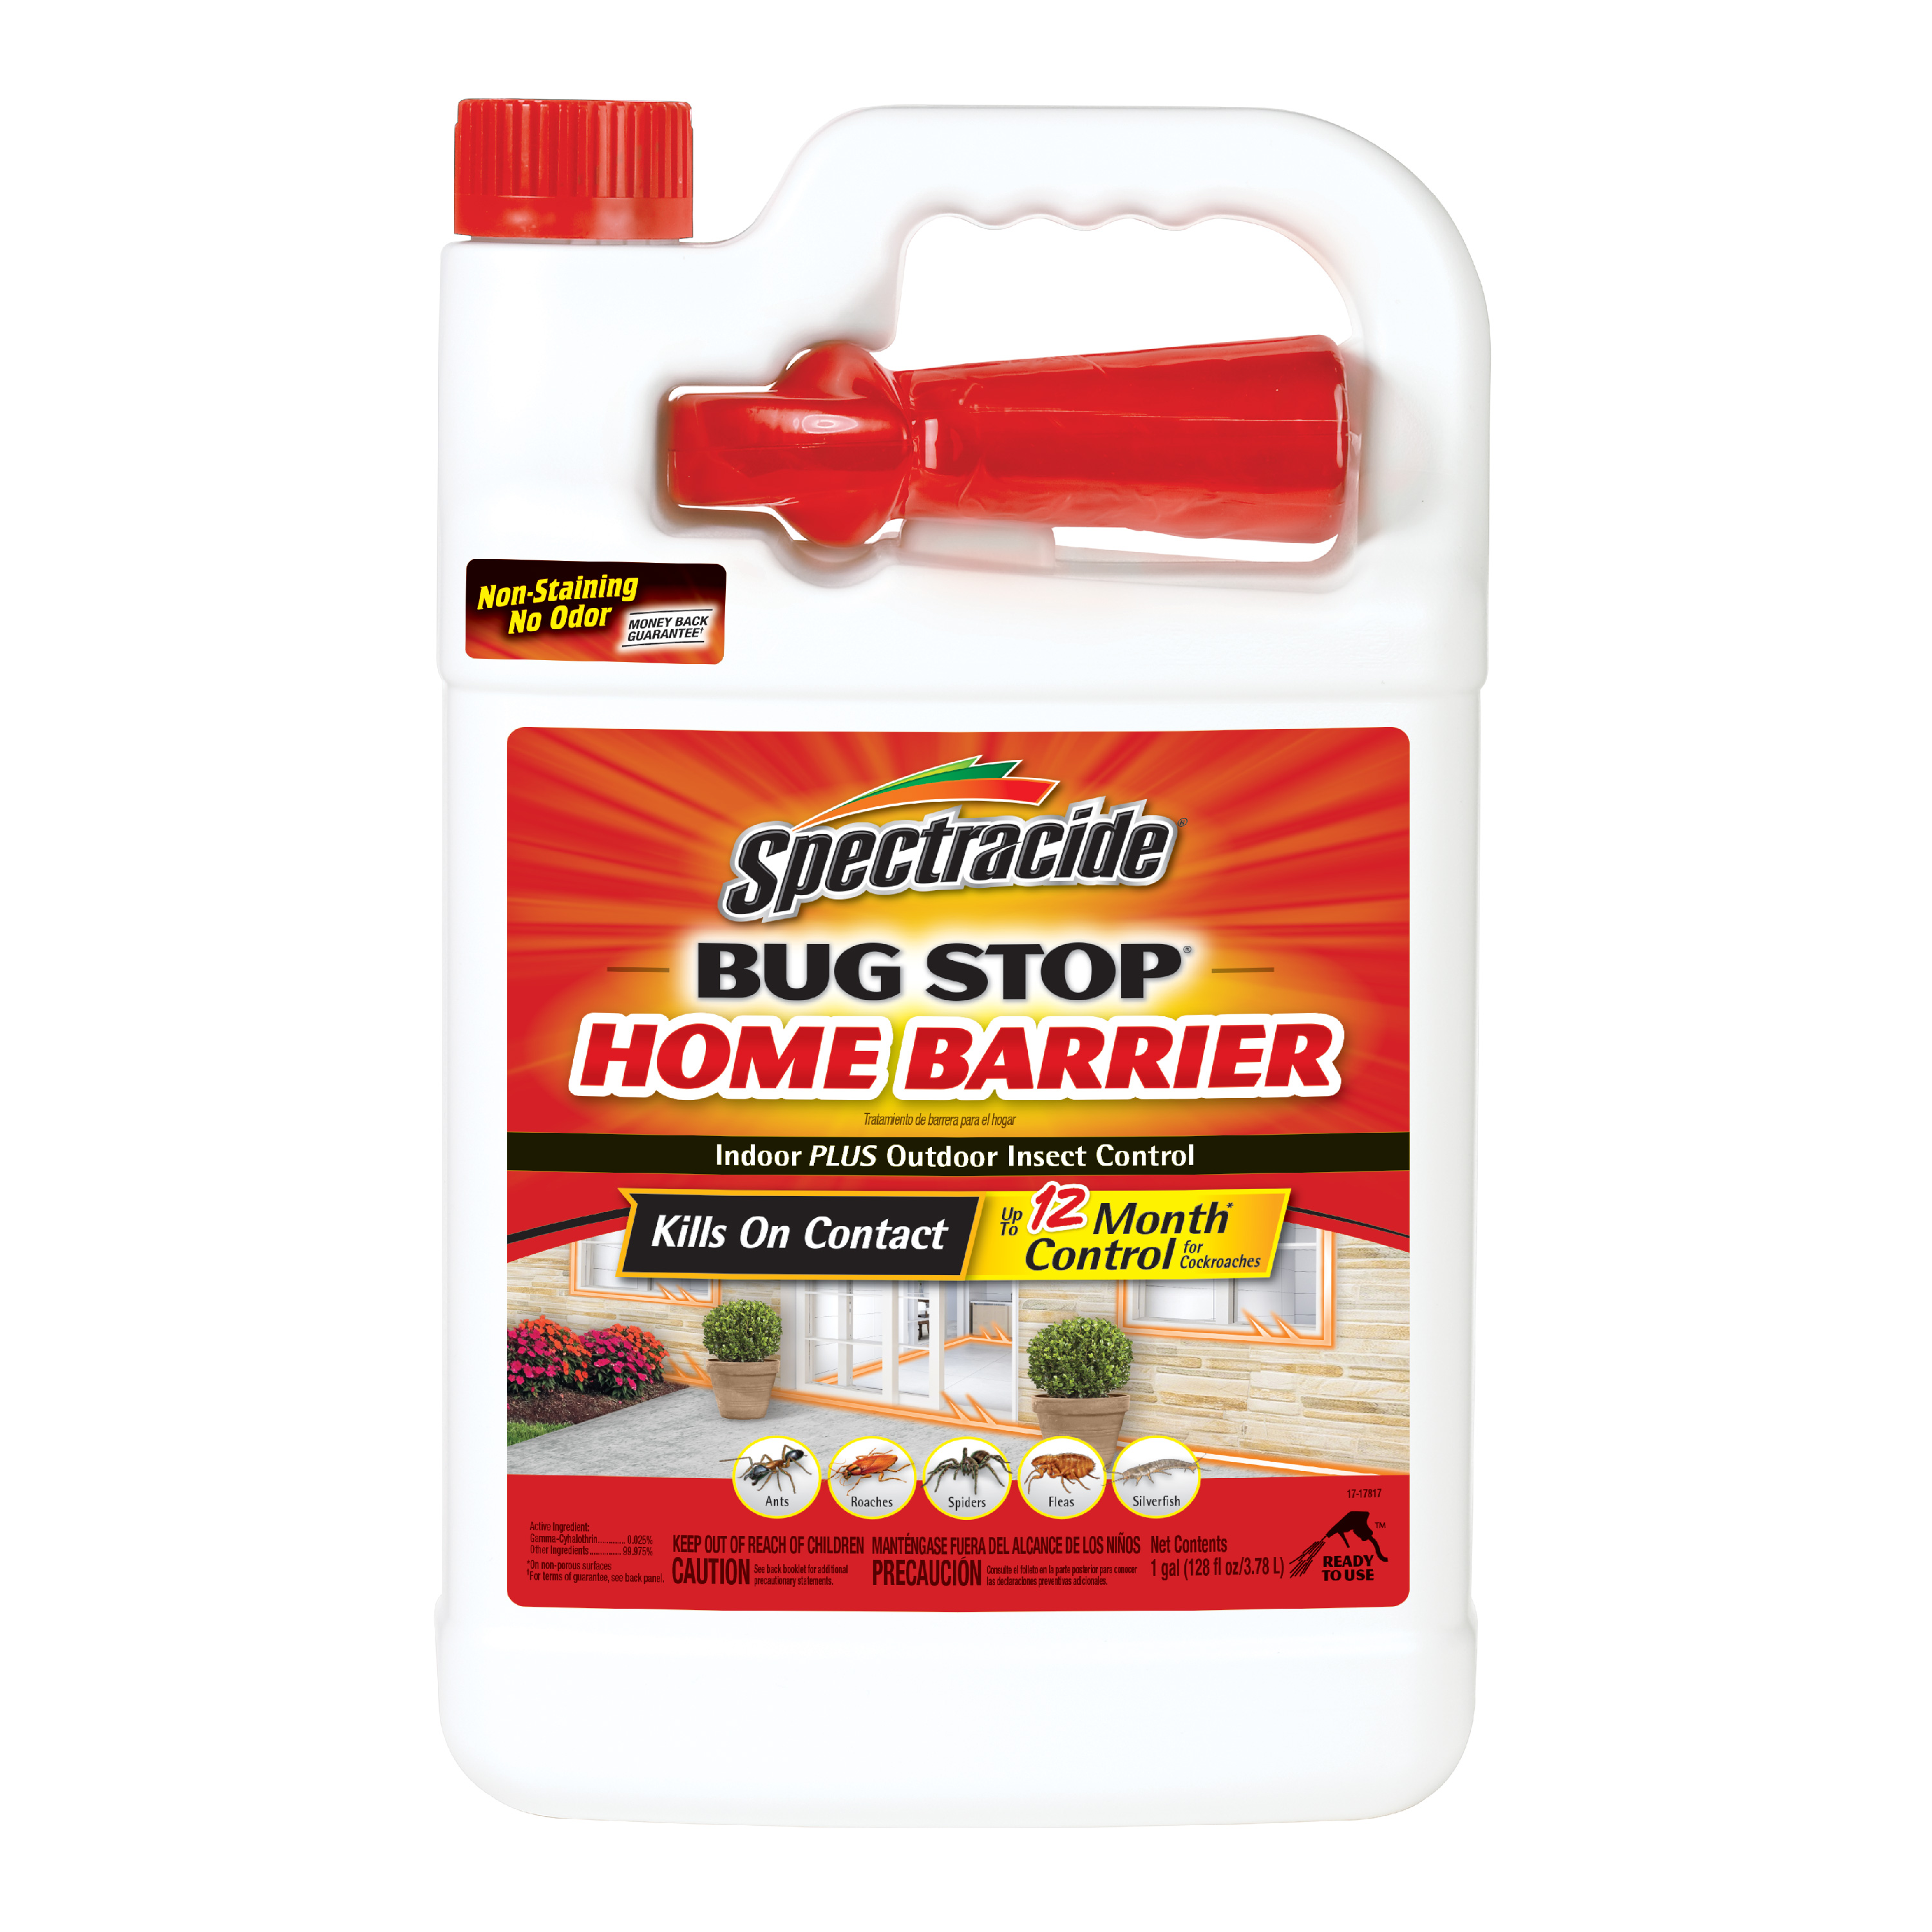 Hot Shot Accushot Sprayer 128-fl oz Bed Bug Killer | HG-96518